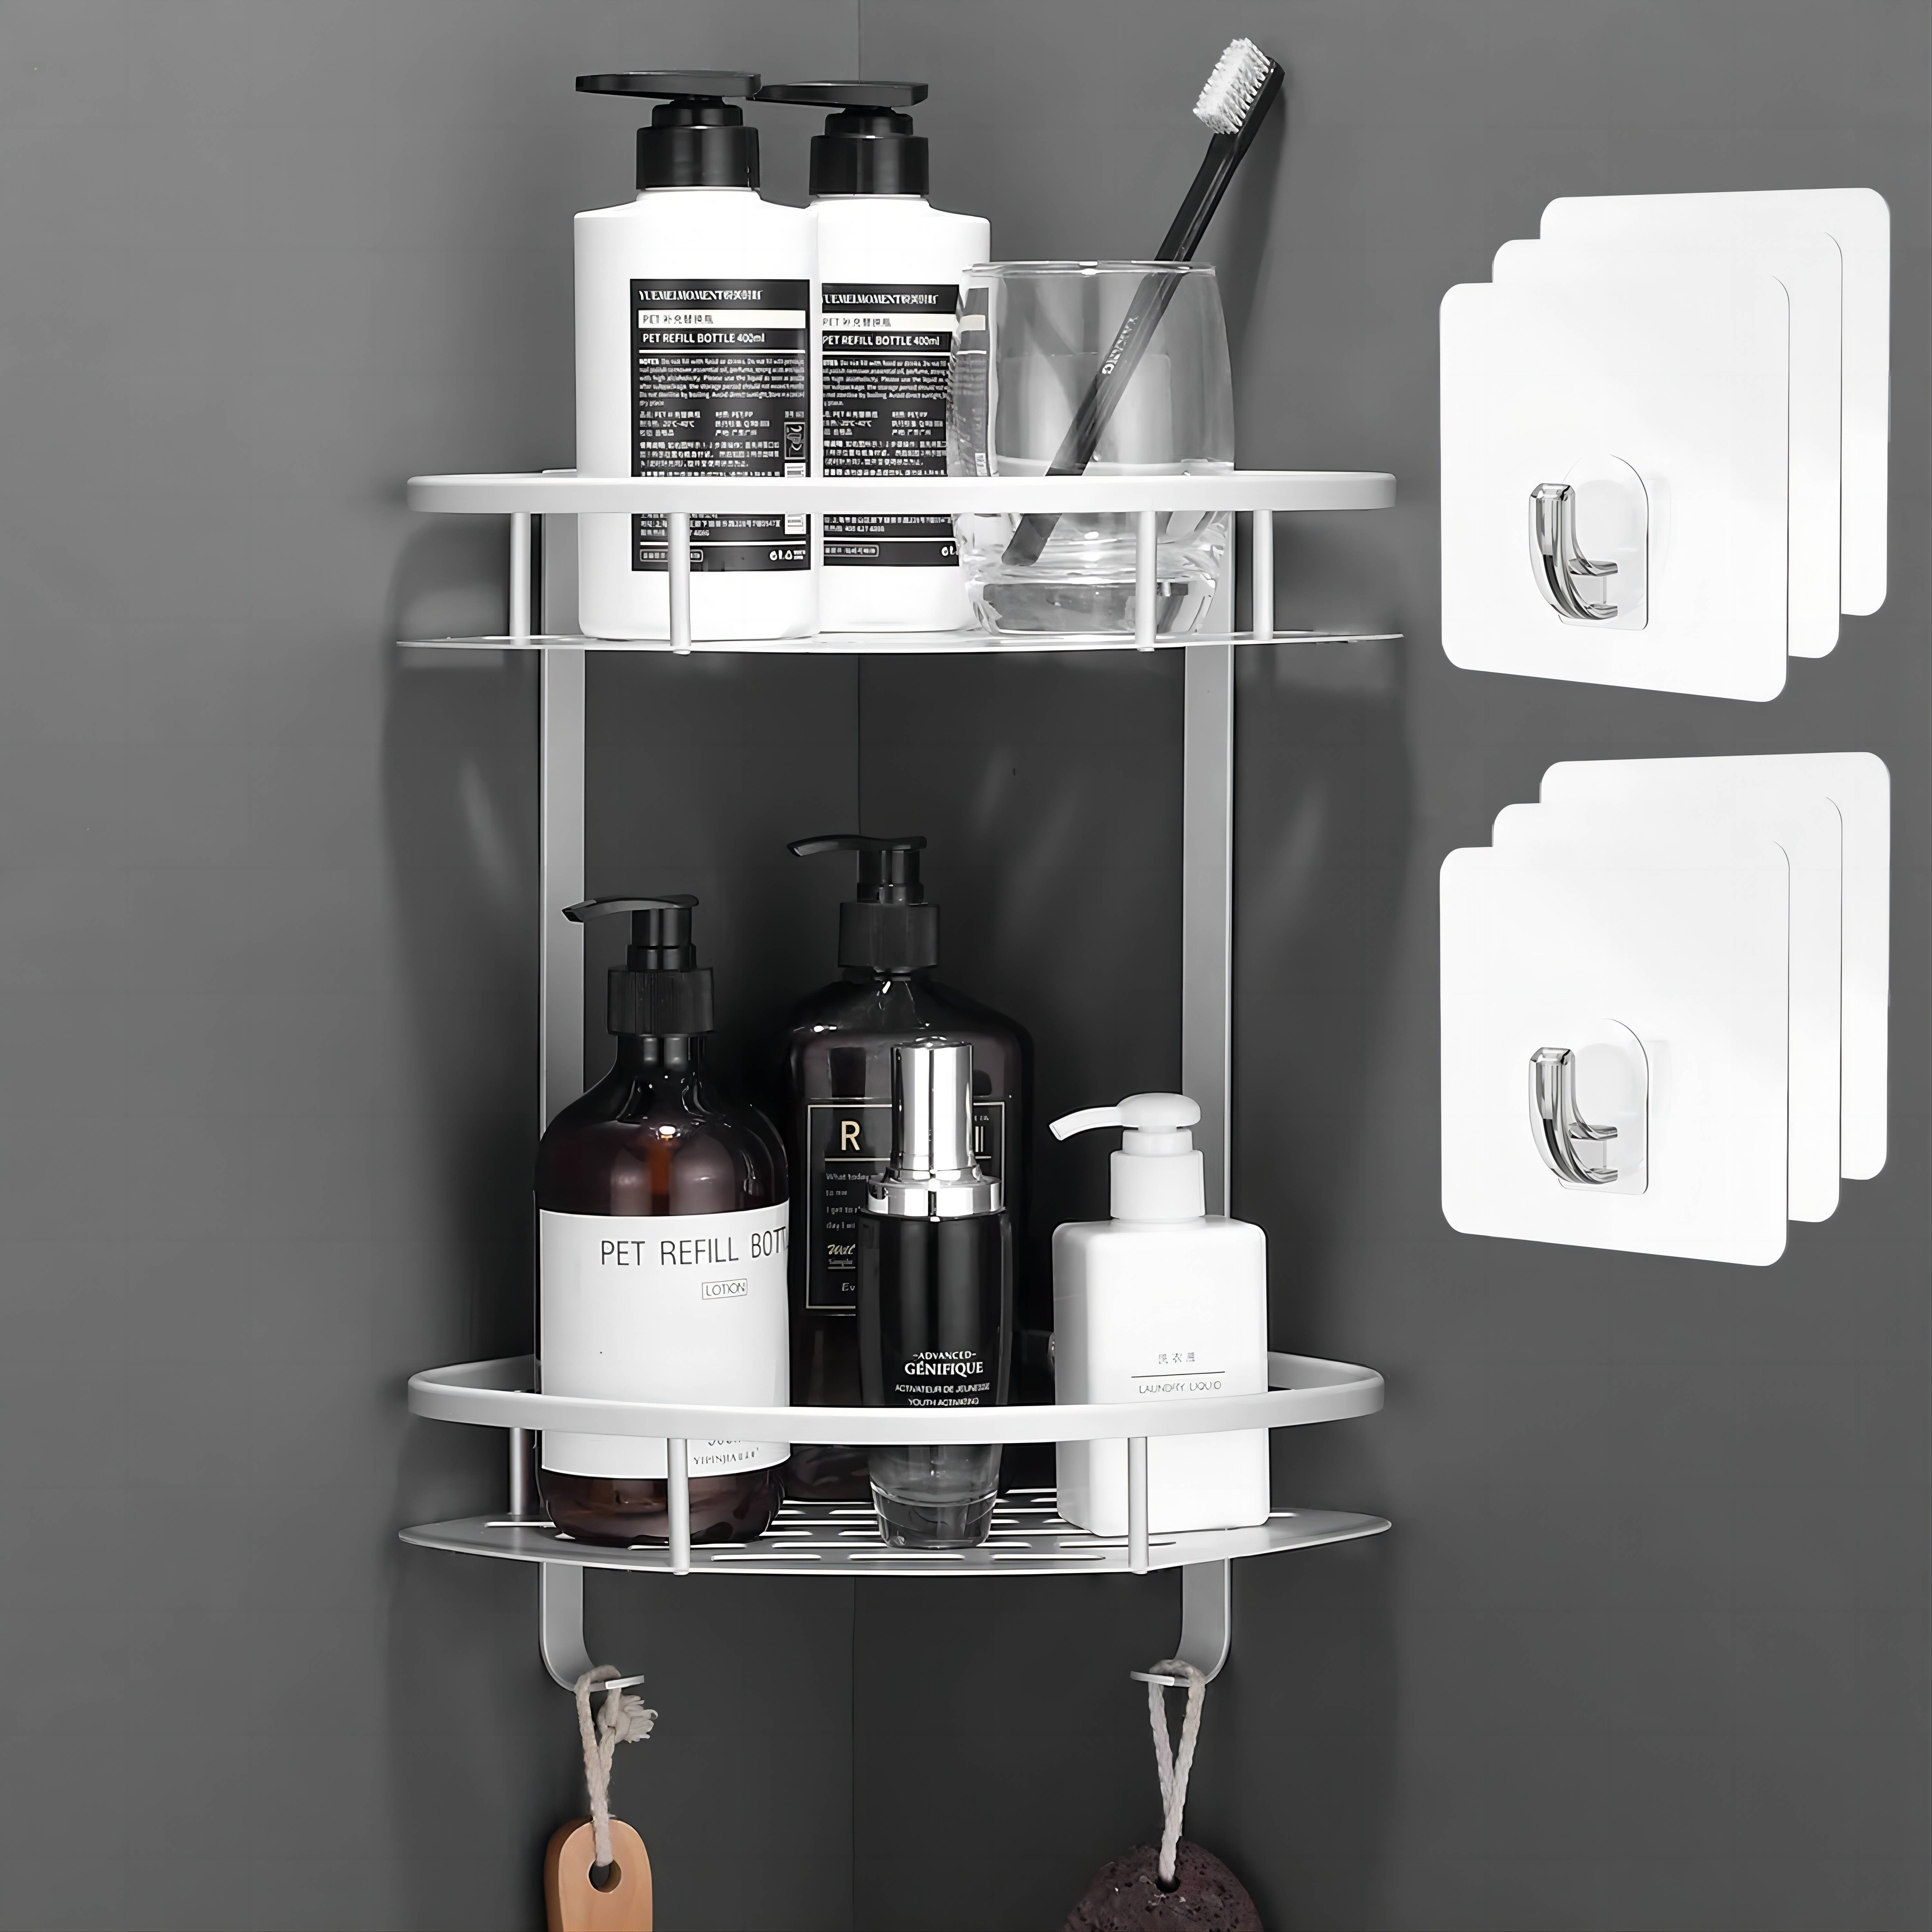 

Aluminium Alloy Shower Caddy Bathroom Shelf, 2 Tiers Corner Shower Caddies, Shower Organizer